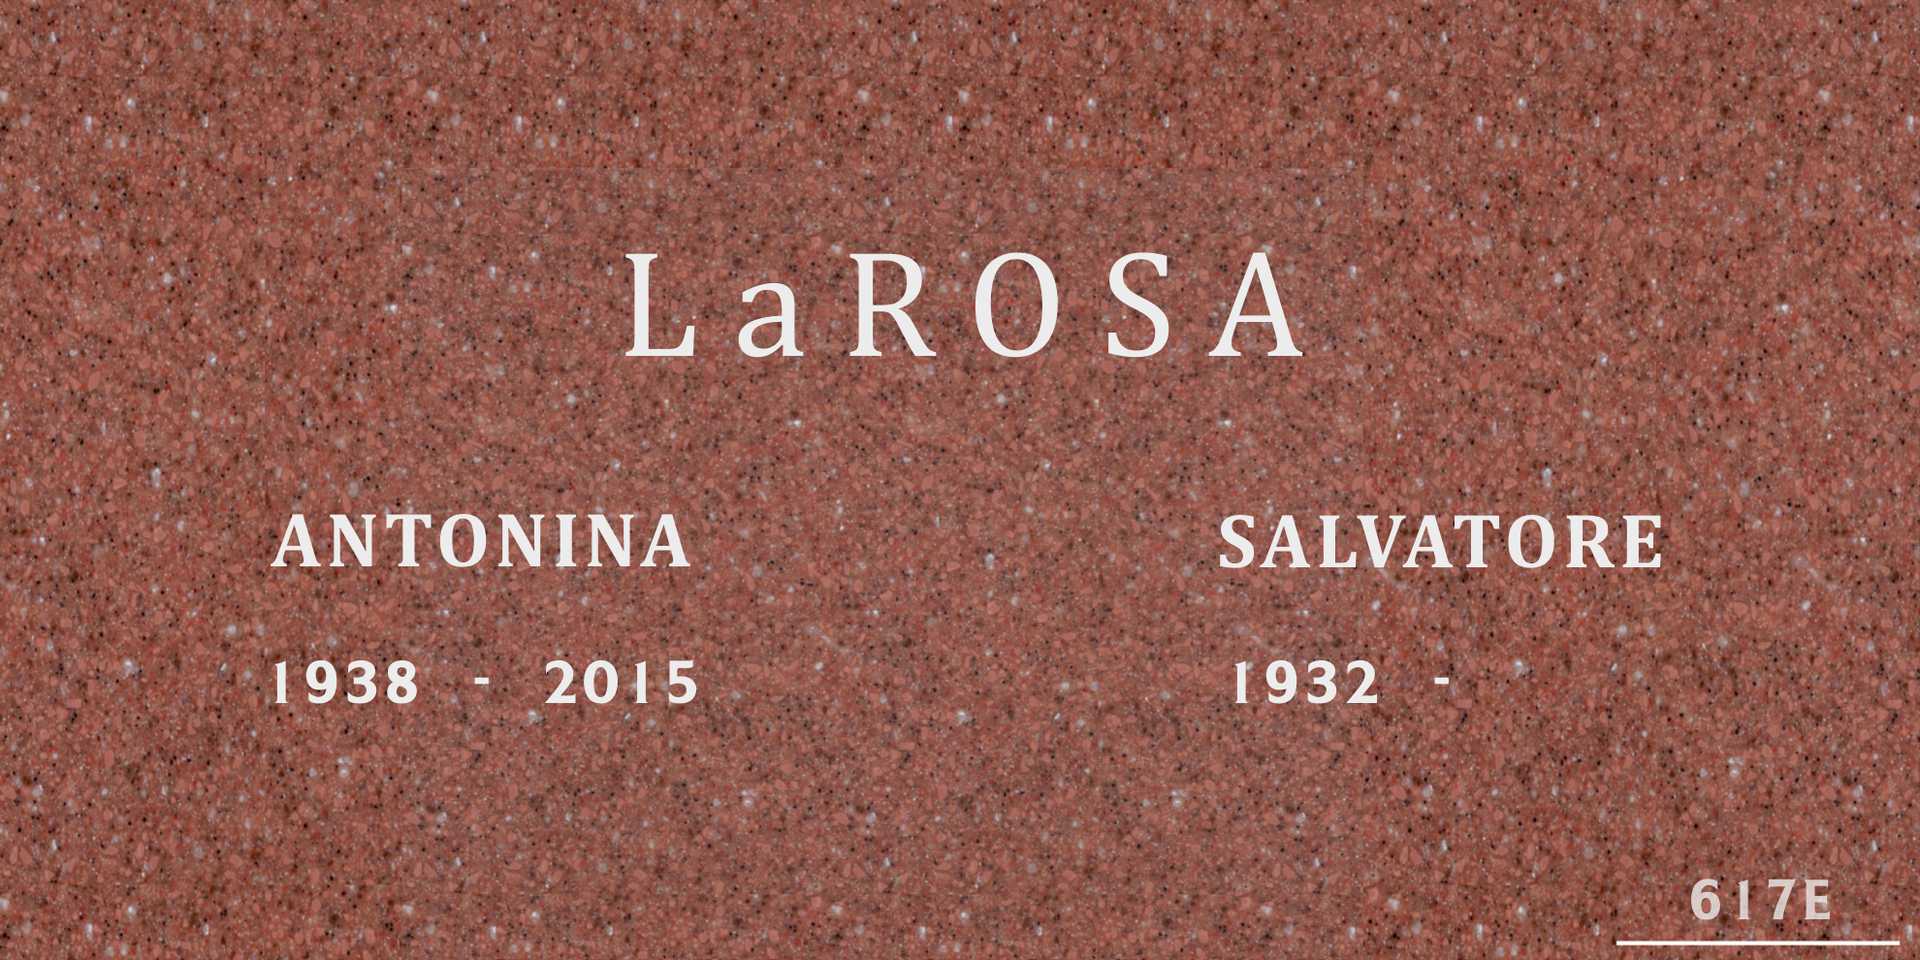 Antonina La Rosa's grave